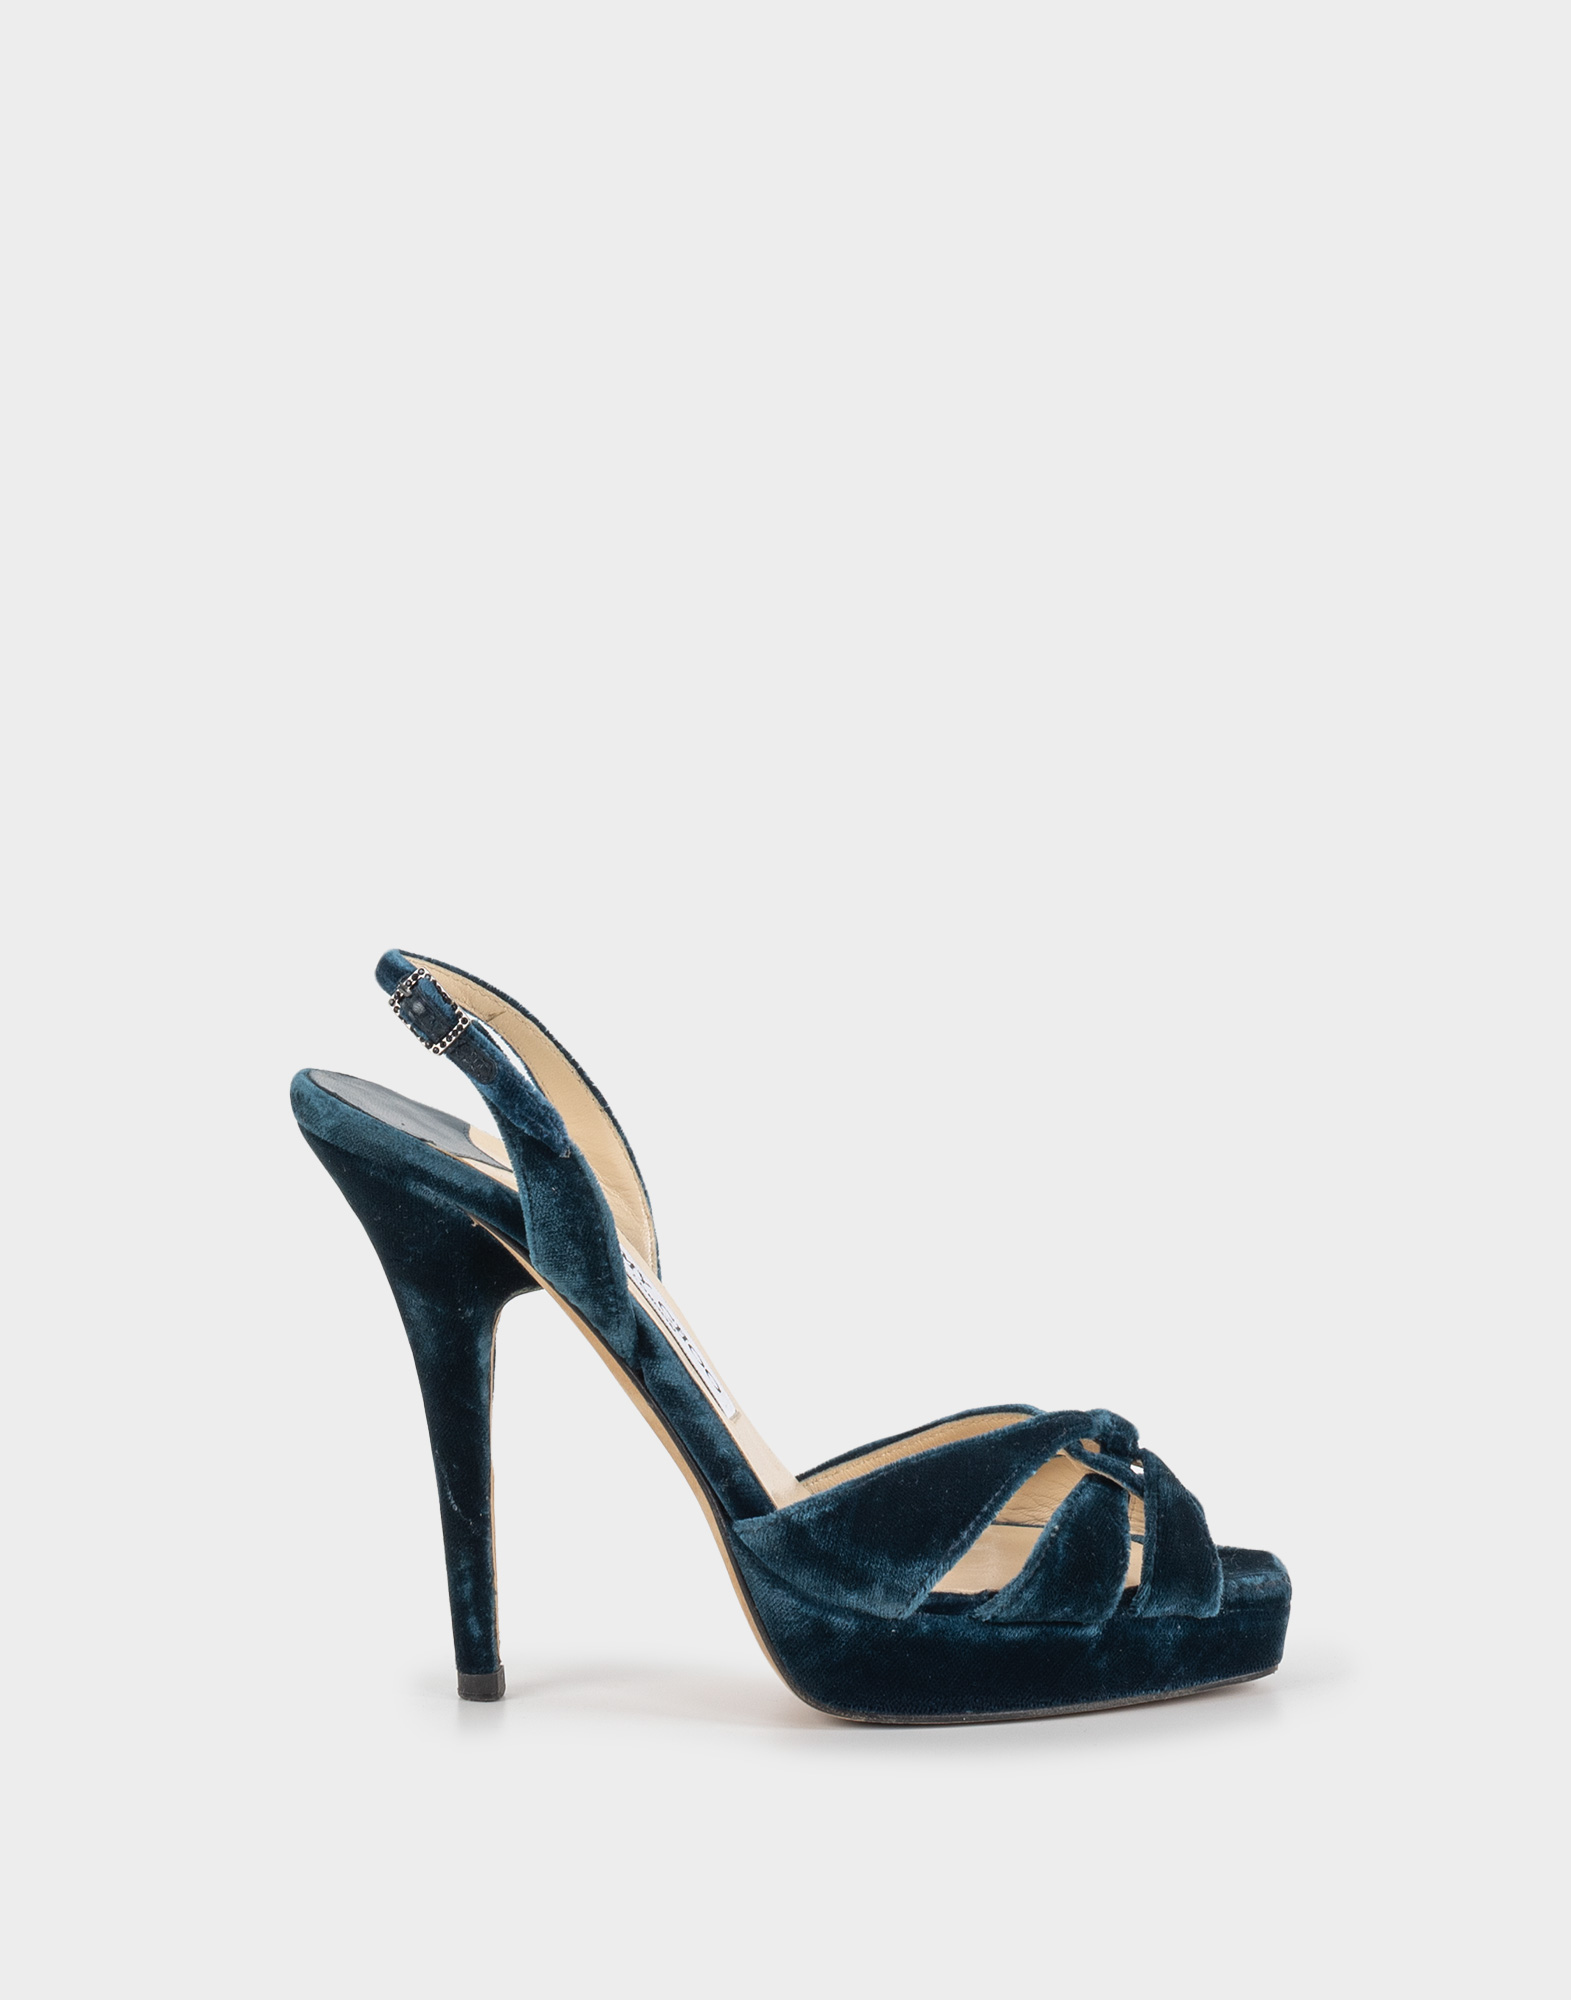 women's stiletto-heeled, blue suede sandals with adjustable strap